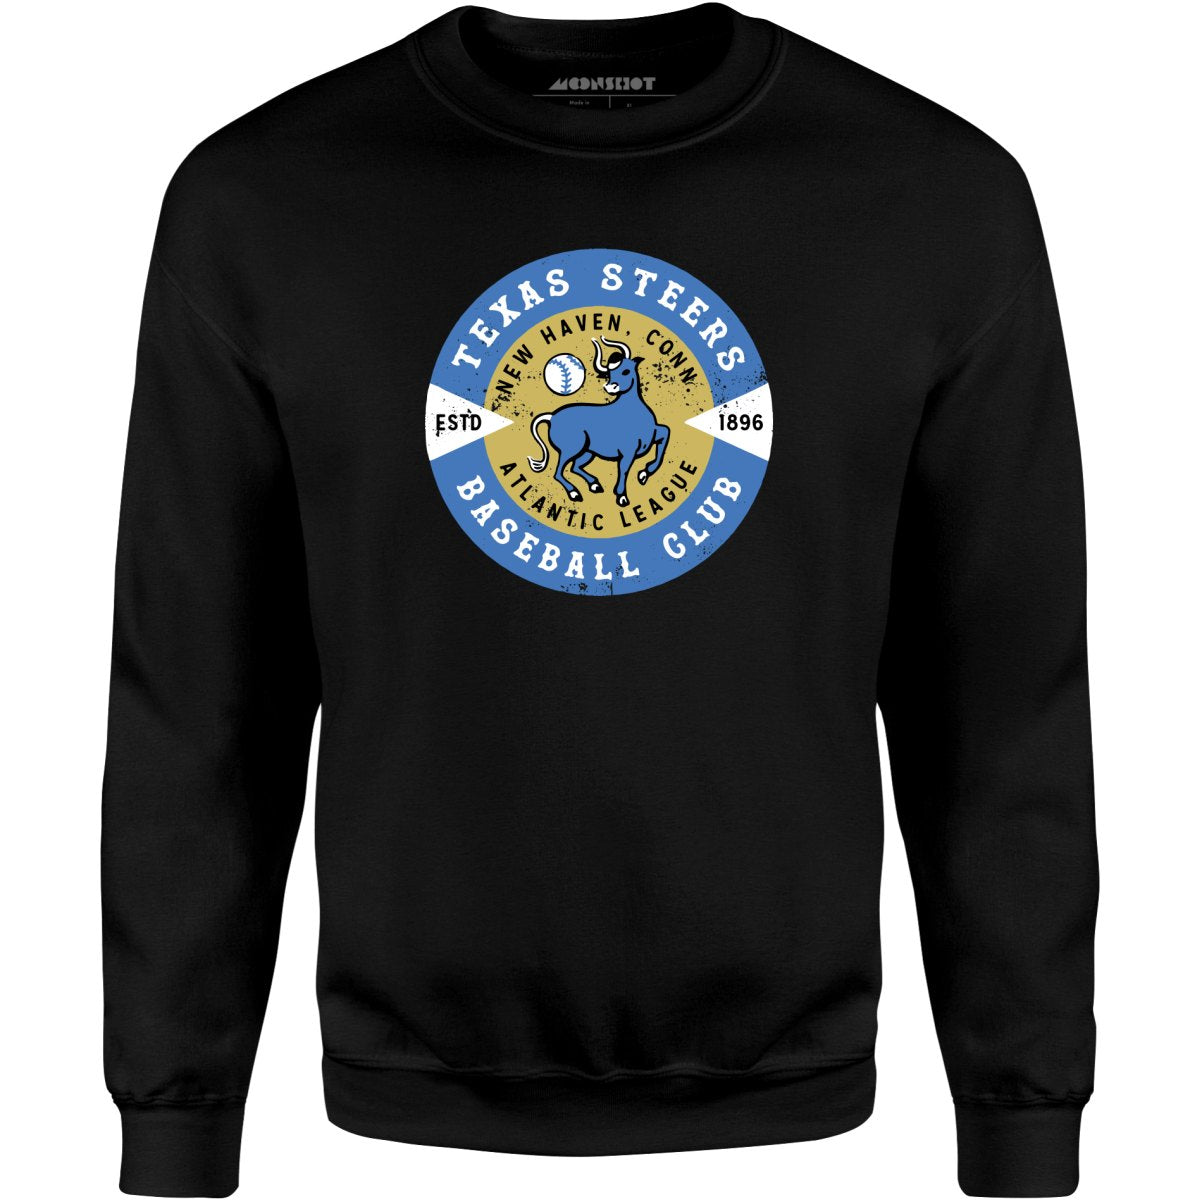 New Haven Texas Steers - Connecticut - Vintage Defunct Baseball Teams - Unisex Sweatshirt